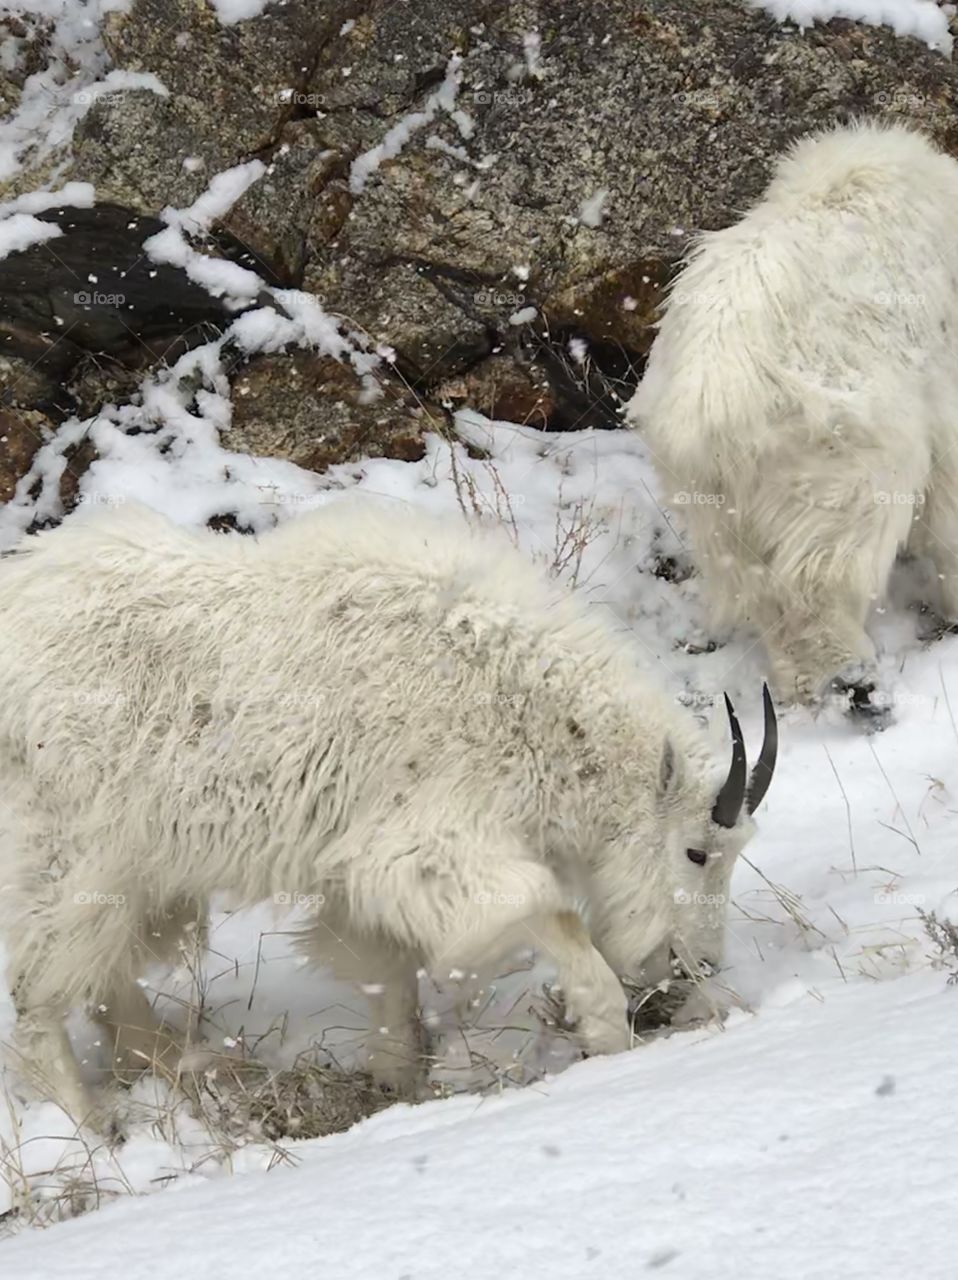 Mountain goats near Mt. Rushmore